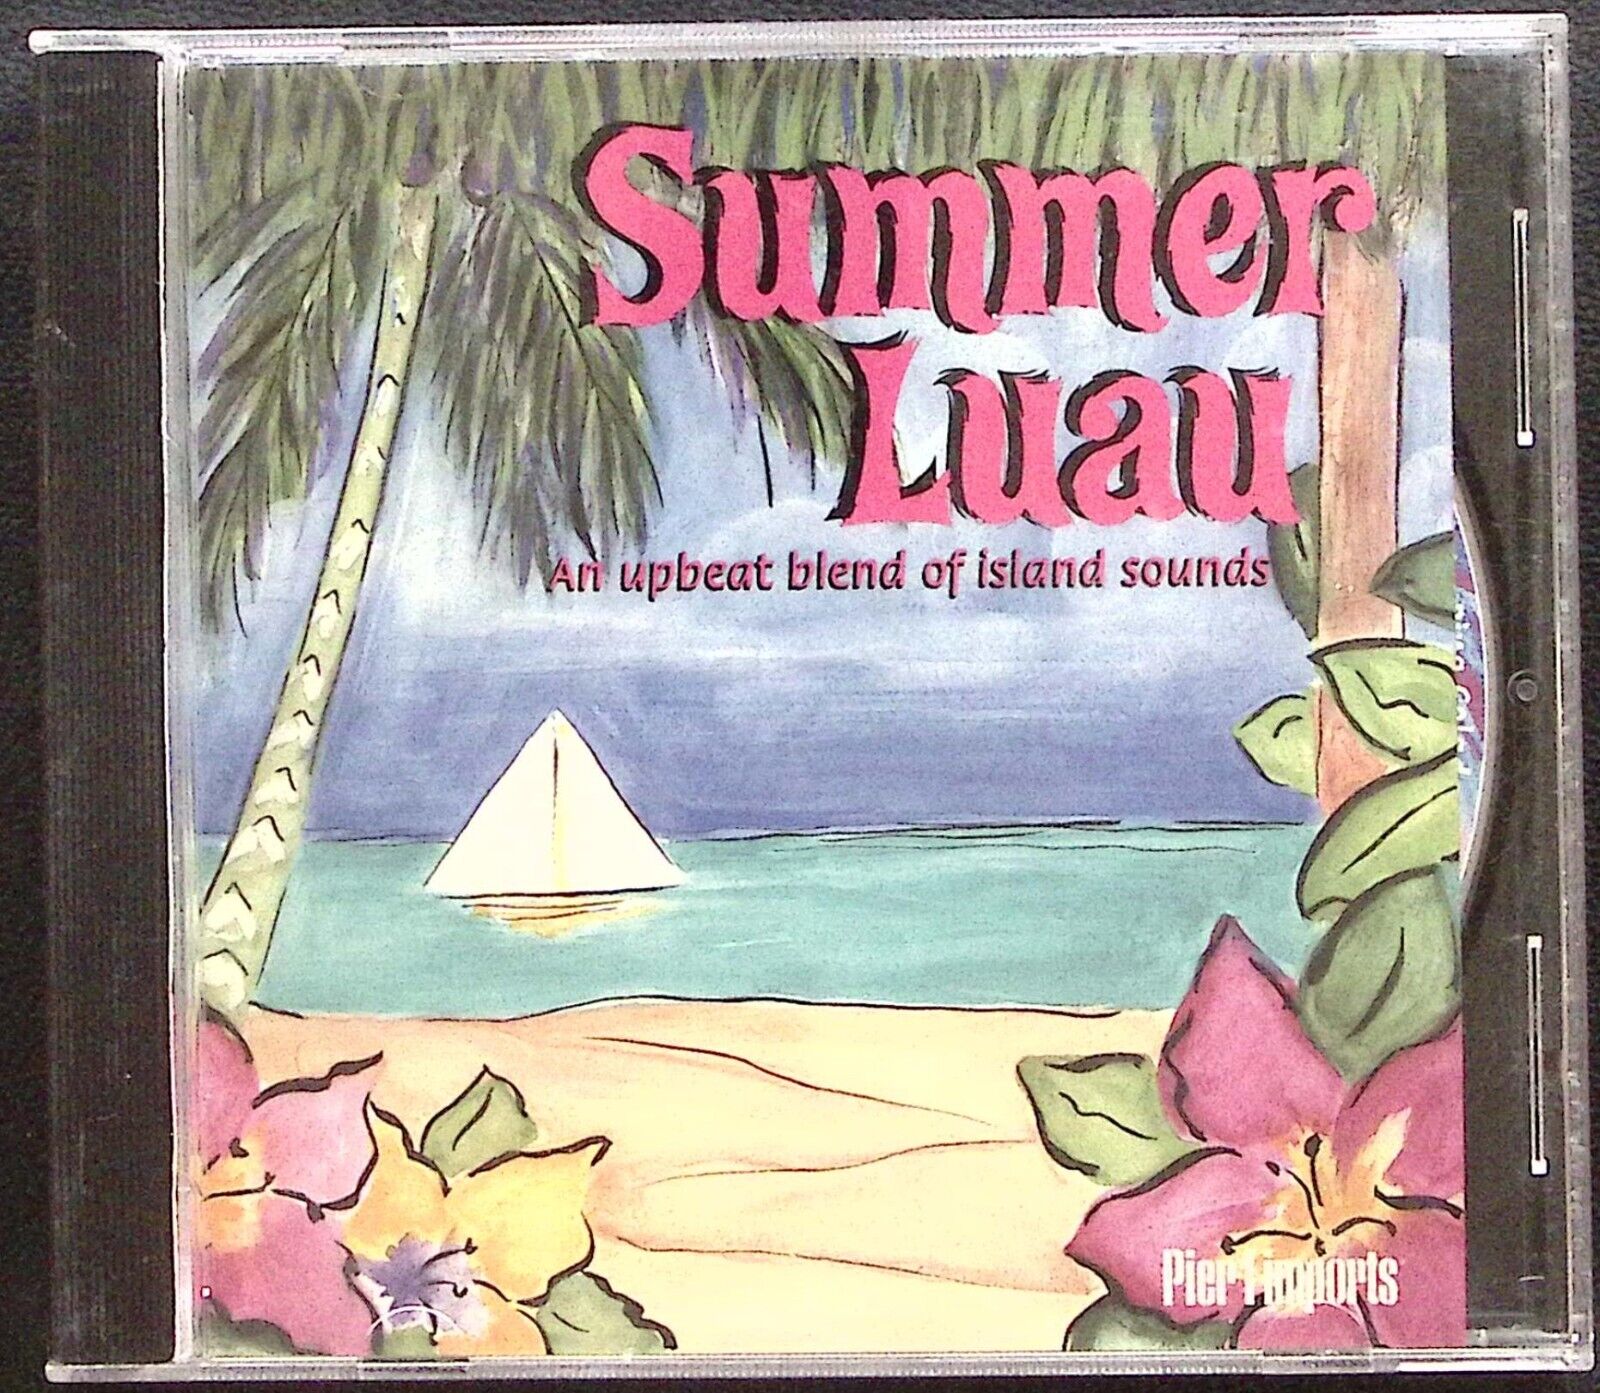 PIER 1 IMPORTS  SUMMER LUAU UPBEAT BLEND OF ISLAND SOUNDS  CD 1872